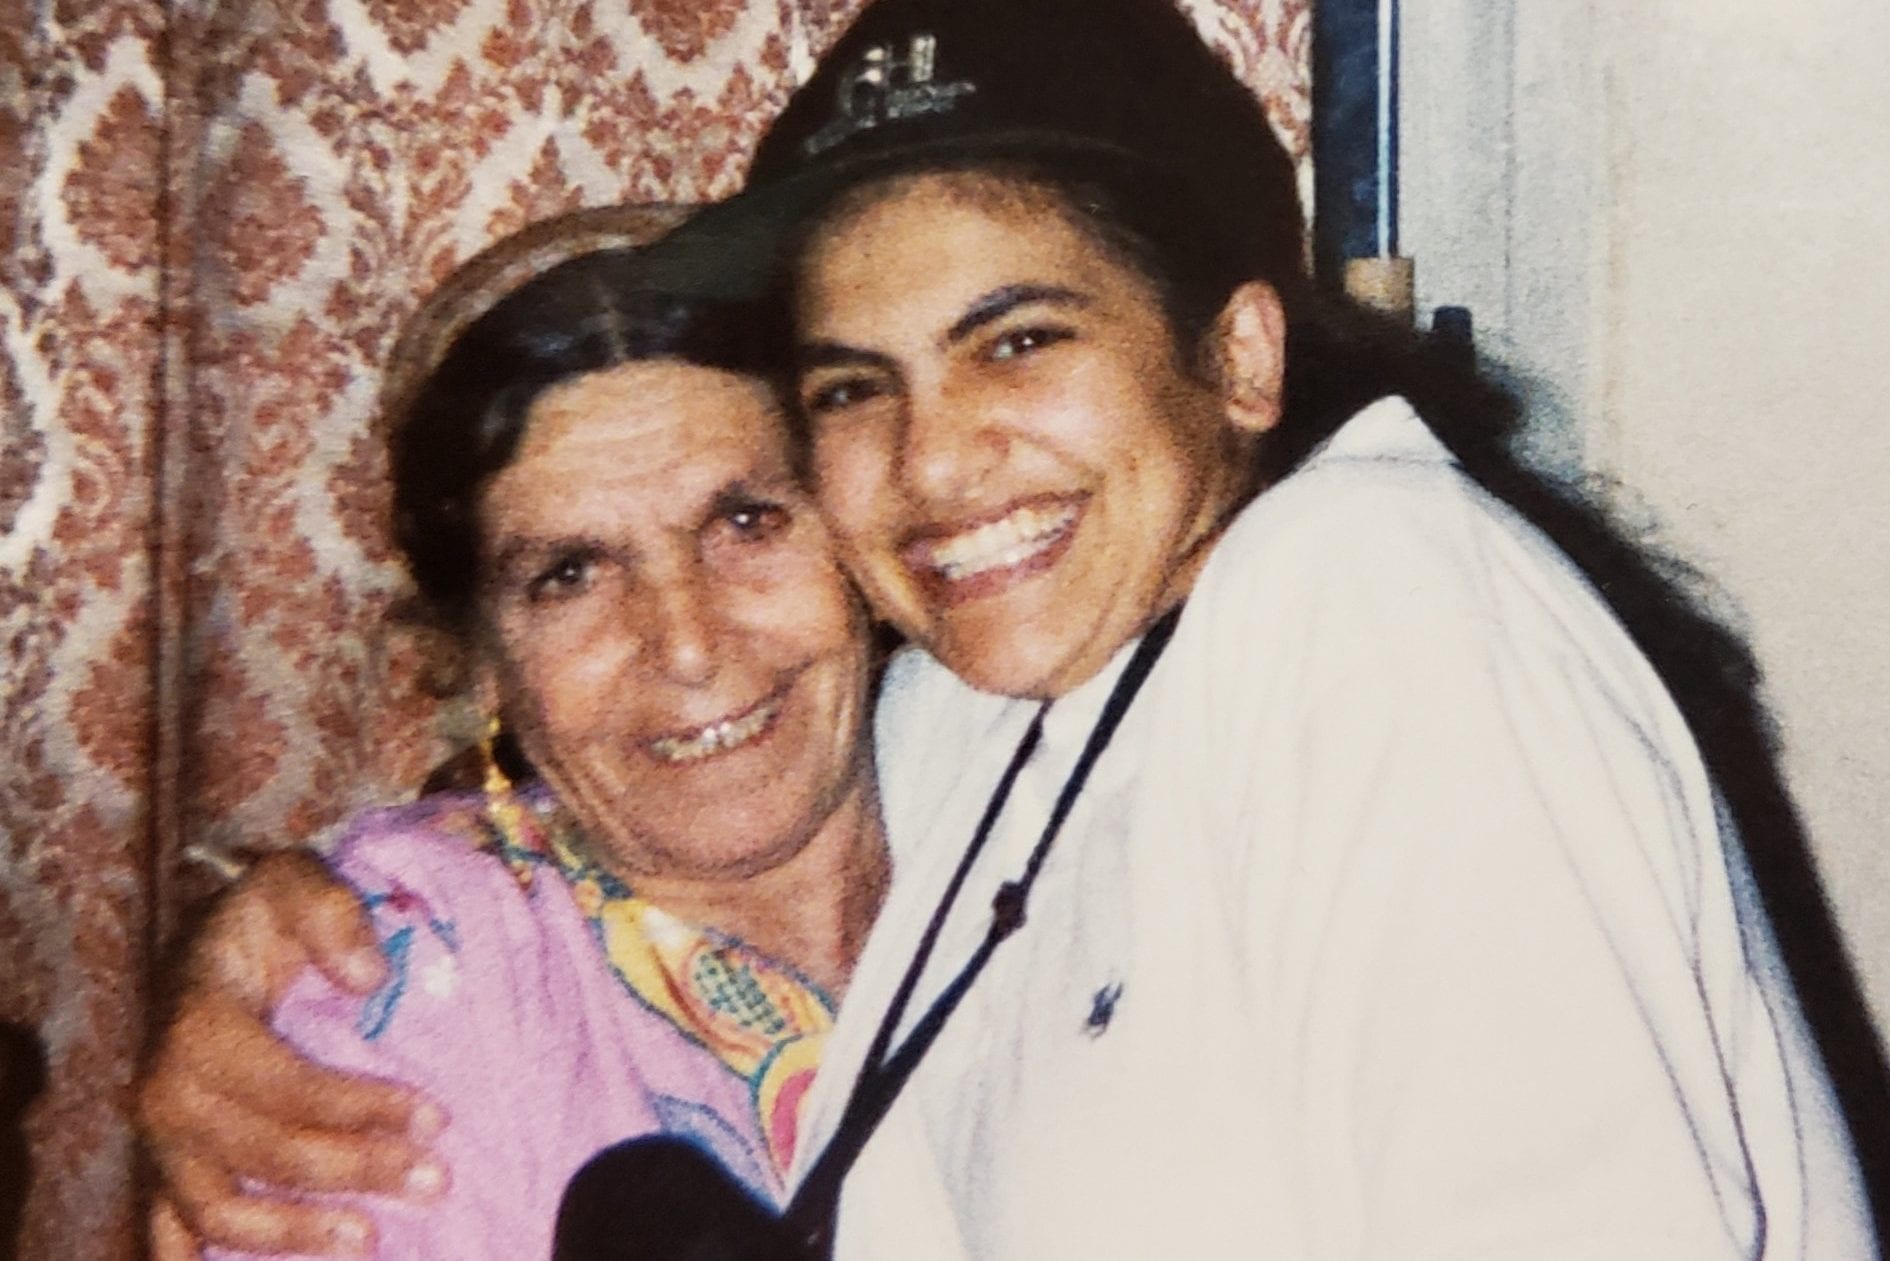 Ninety-year-old Muftia Tlaib and US congresswoman Rashida Tlaib [Rashida Tlaib - Twitter]